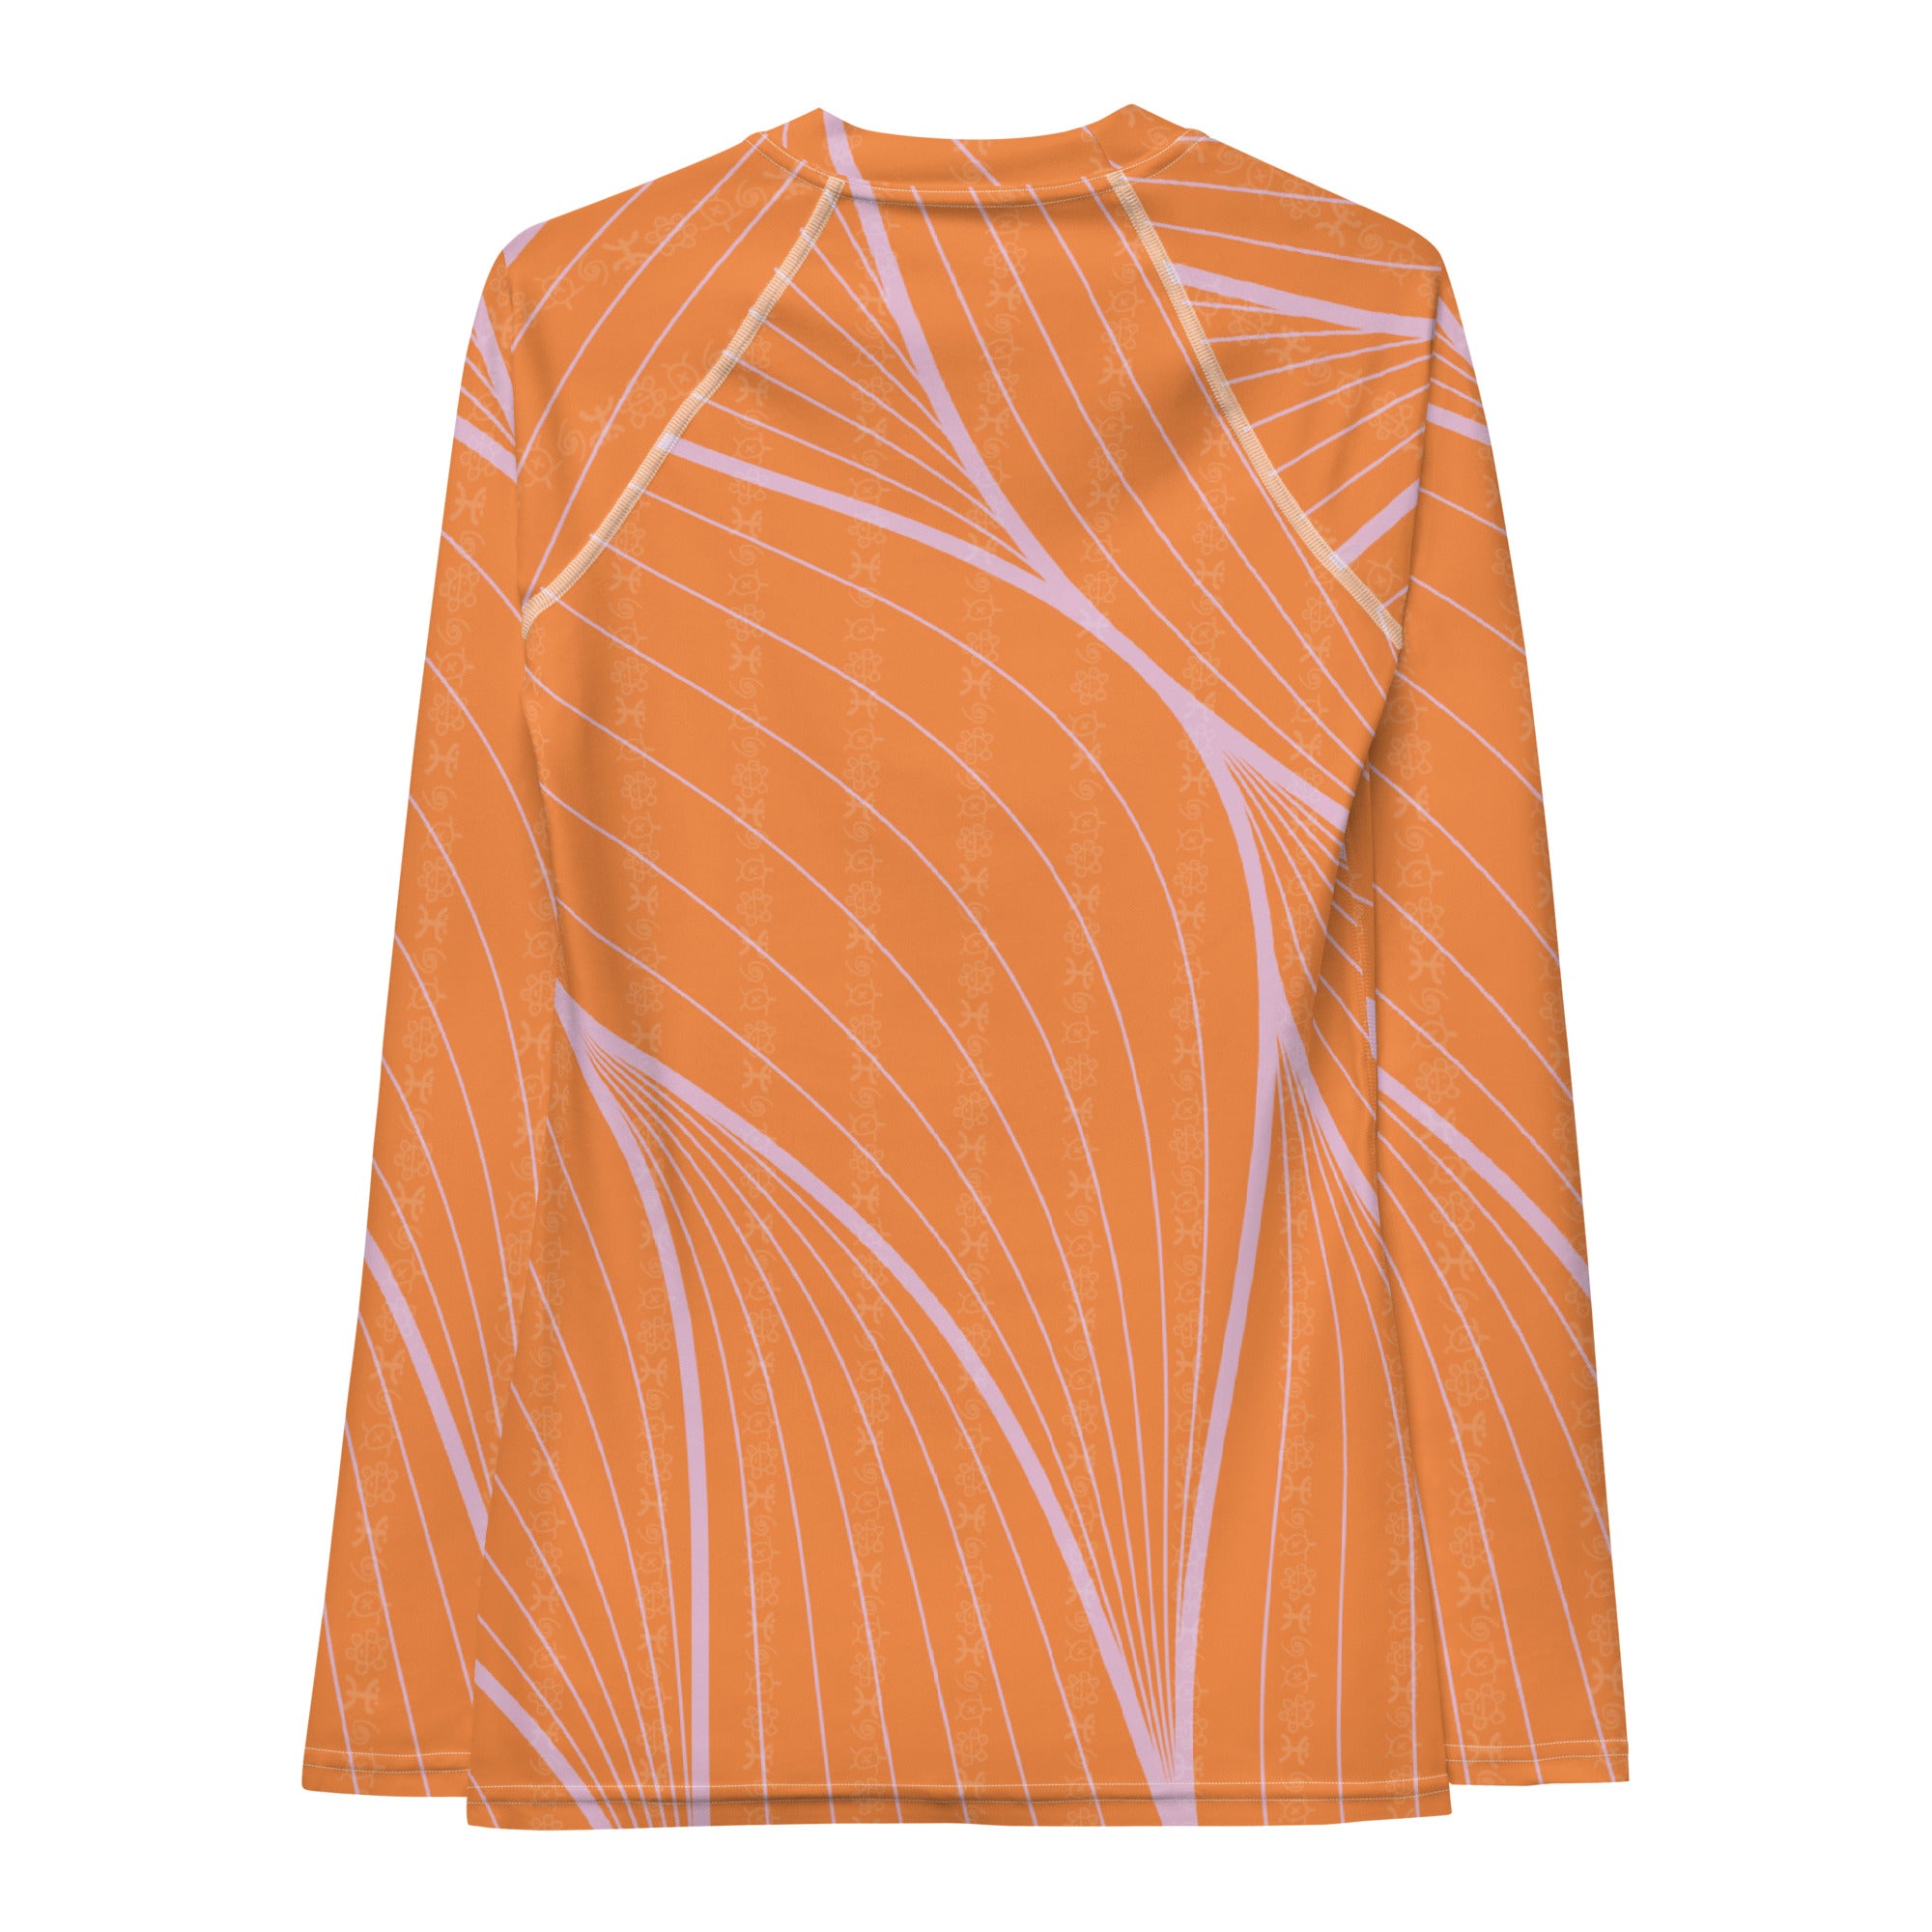 AGAD Tribal Women's Long Sleeve (Vibrant Orange)